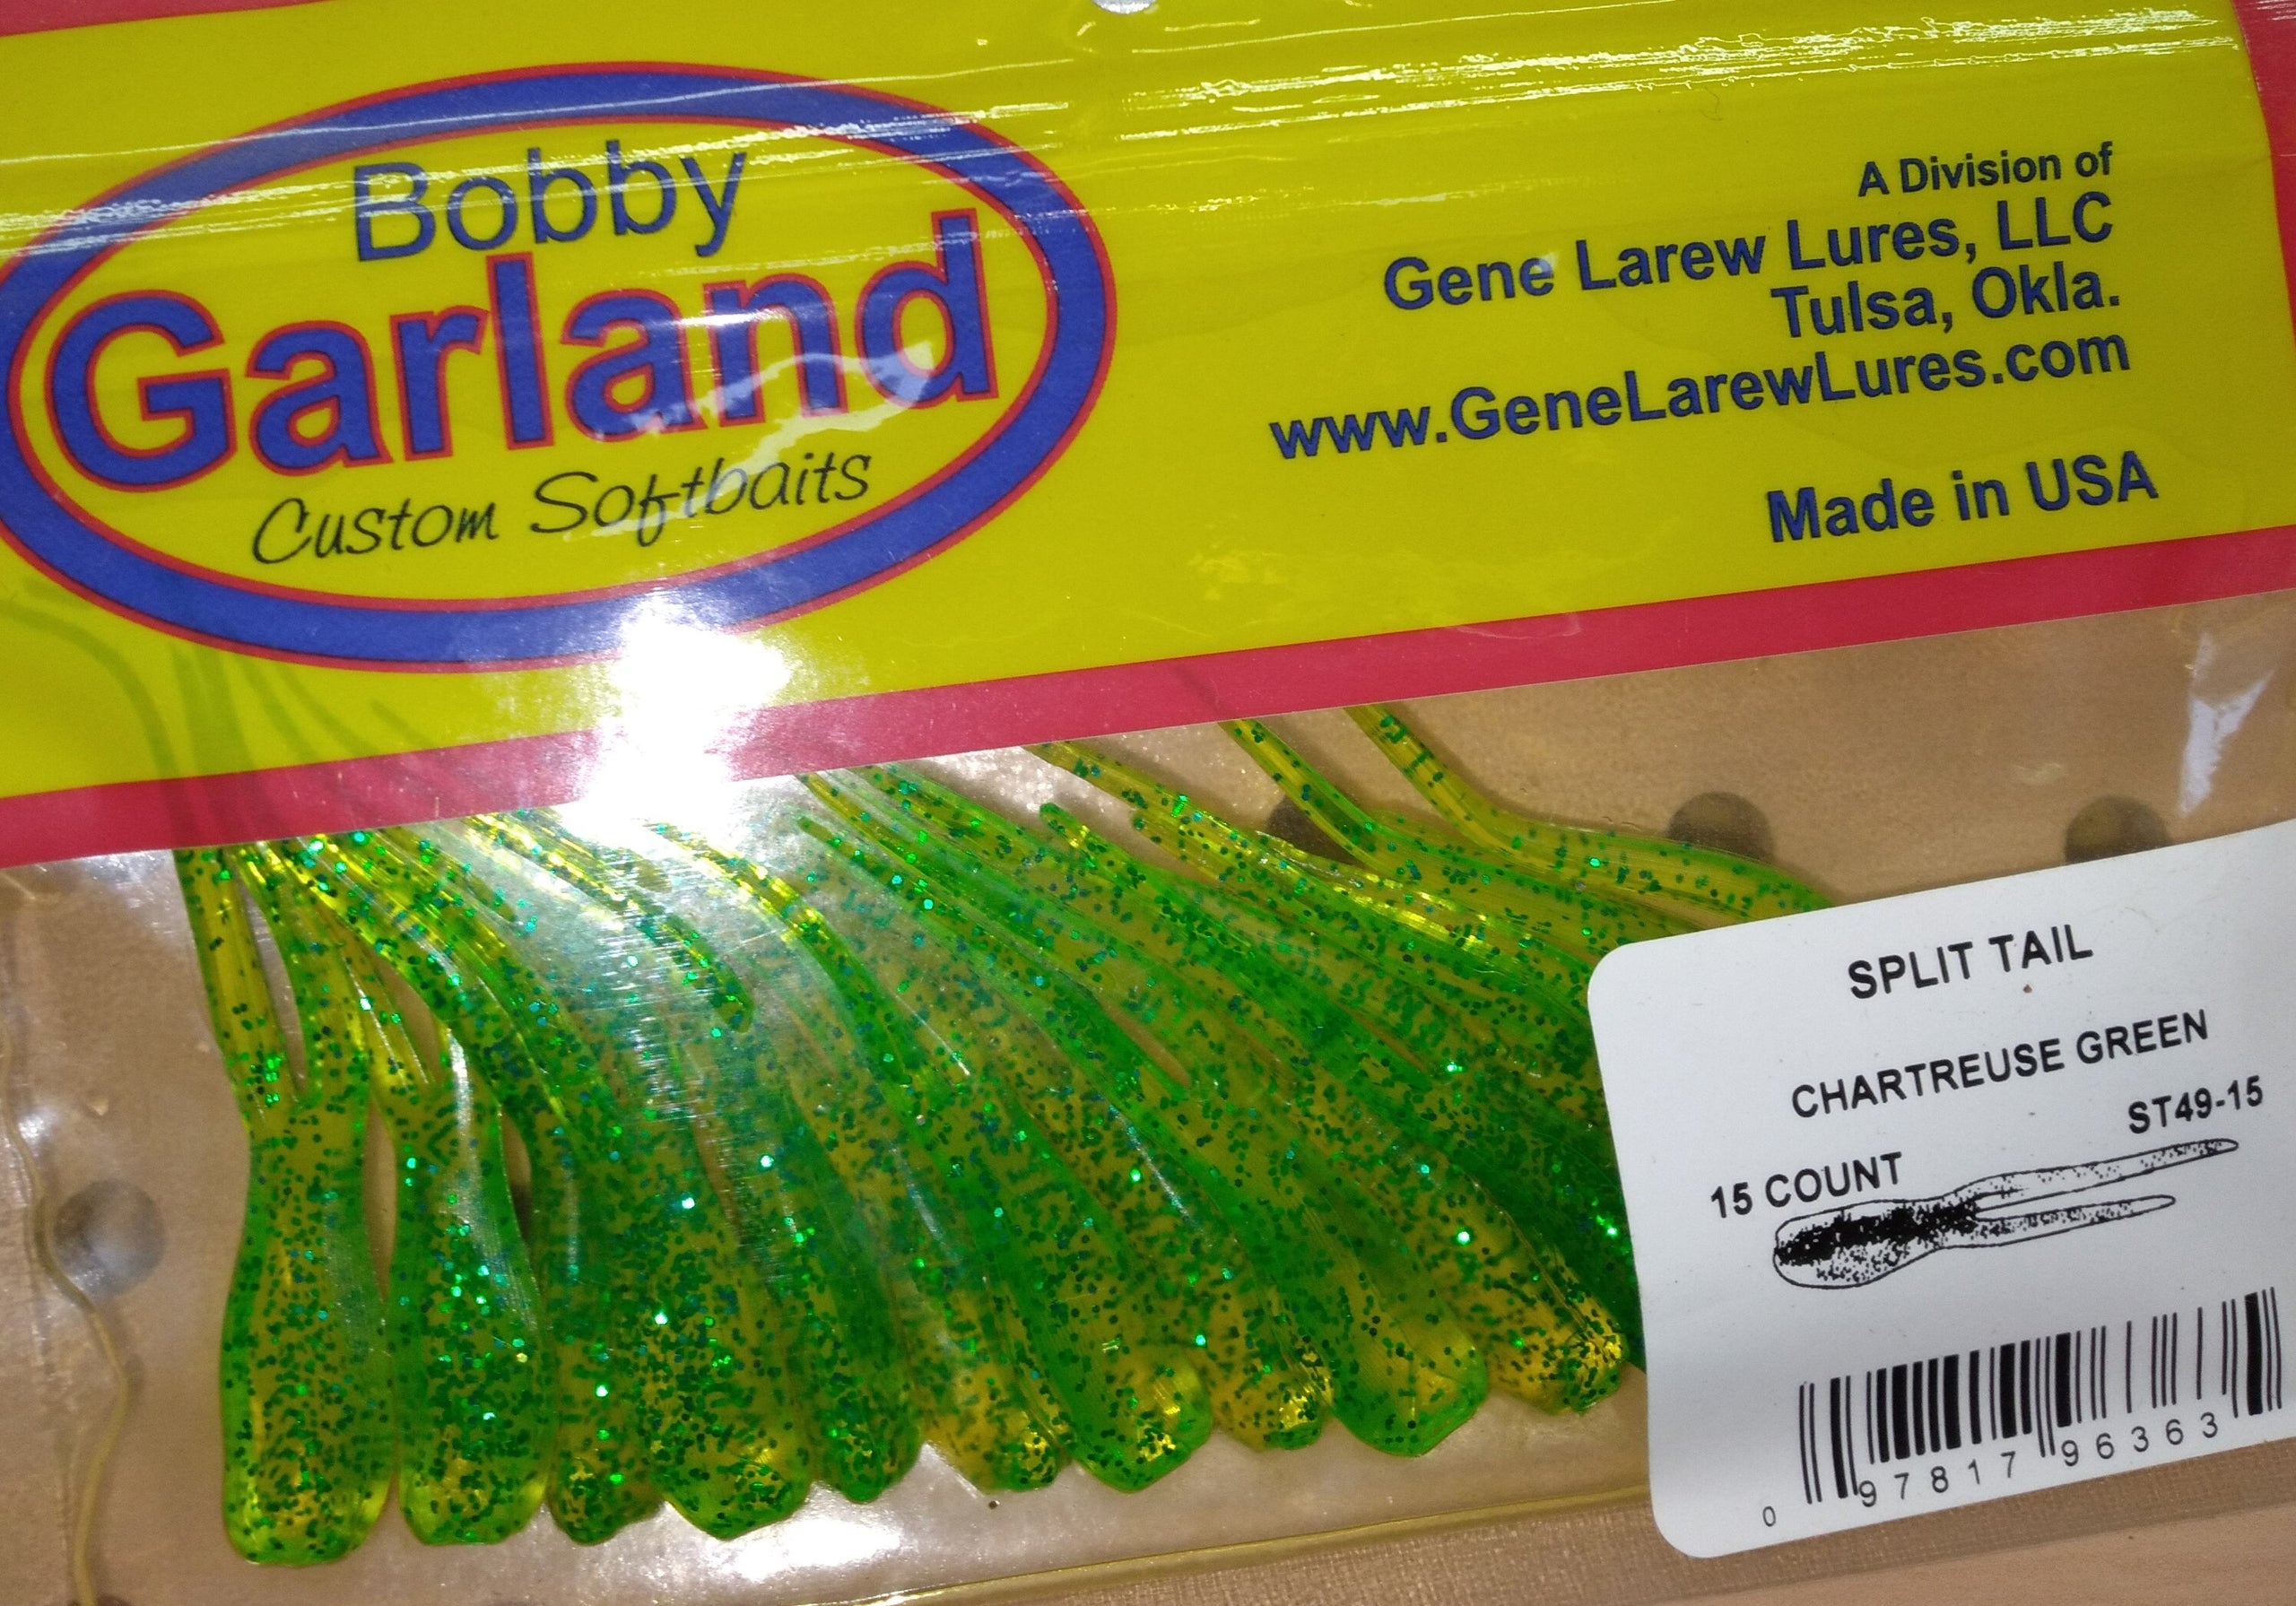 ST49 2 Bobby Garland Split Tail Chartreuse